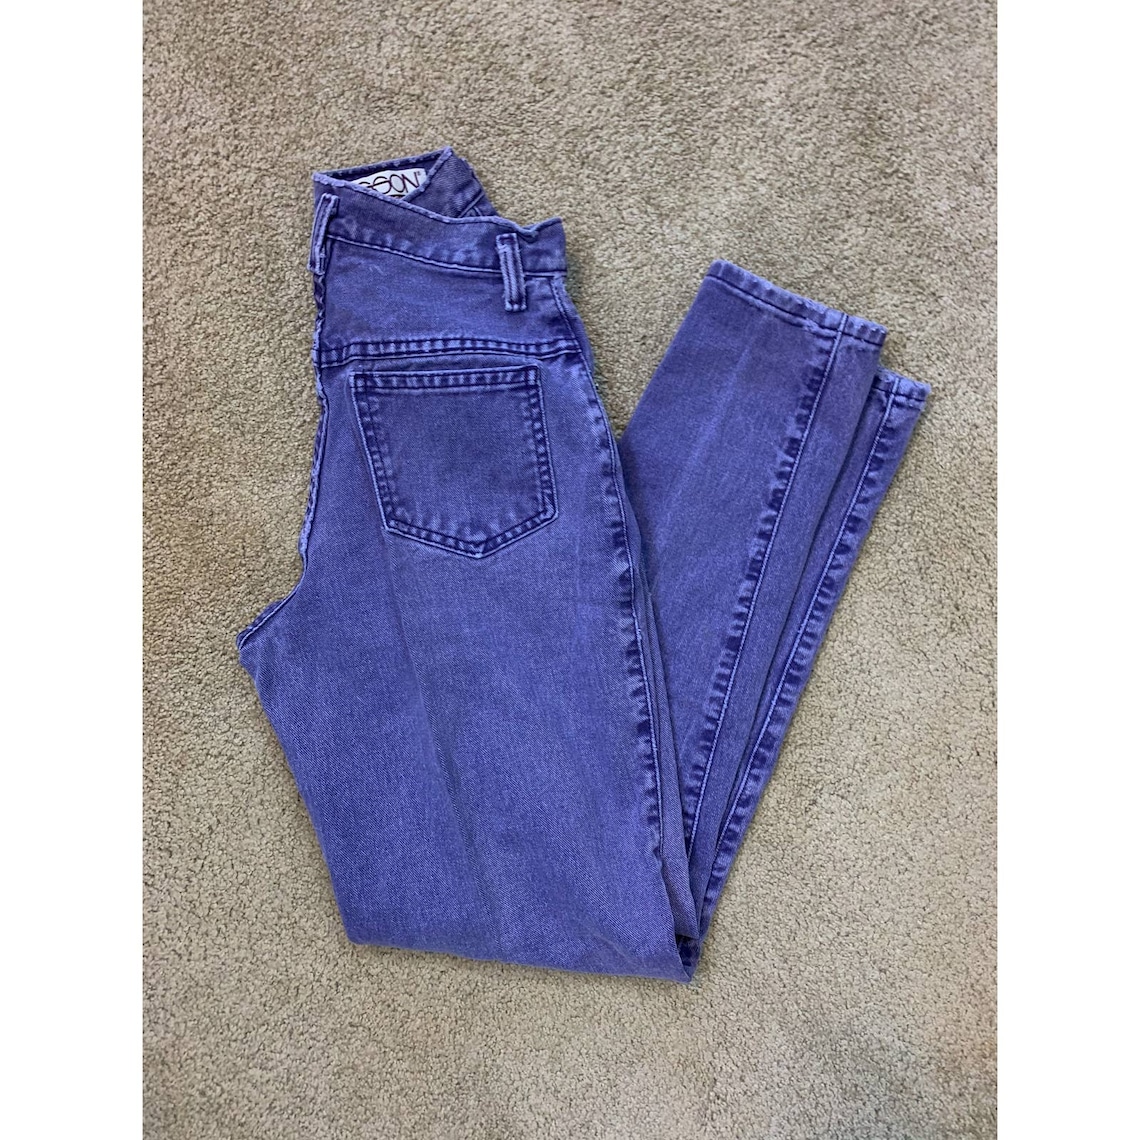 Purple Washed 'Sasson' Vintage Jeans Size 3/4 | Etsy